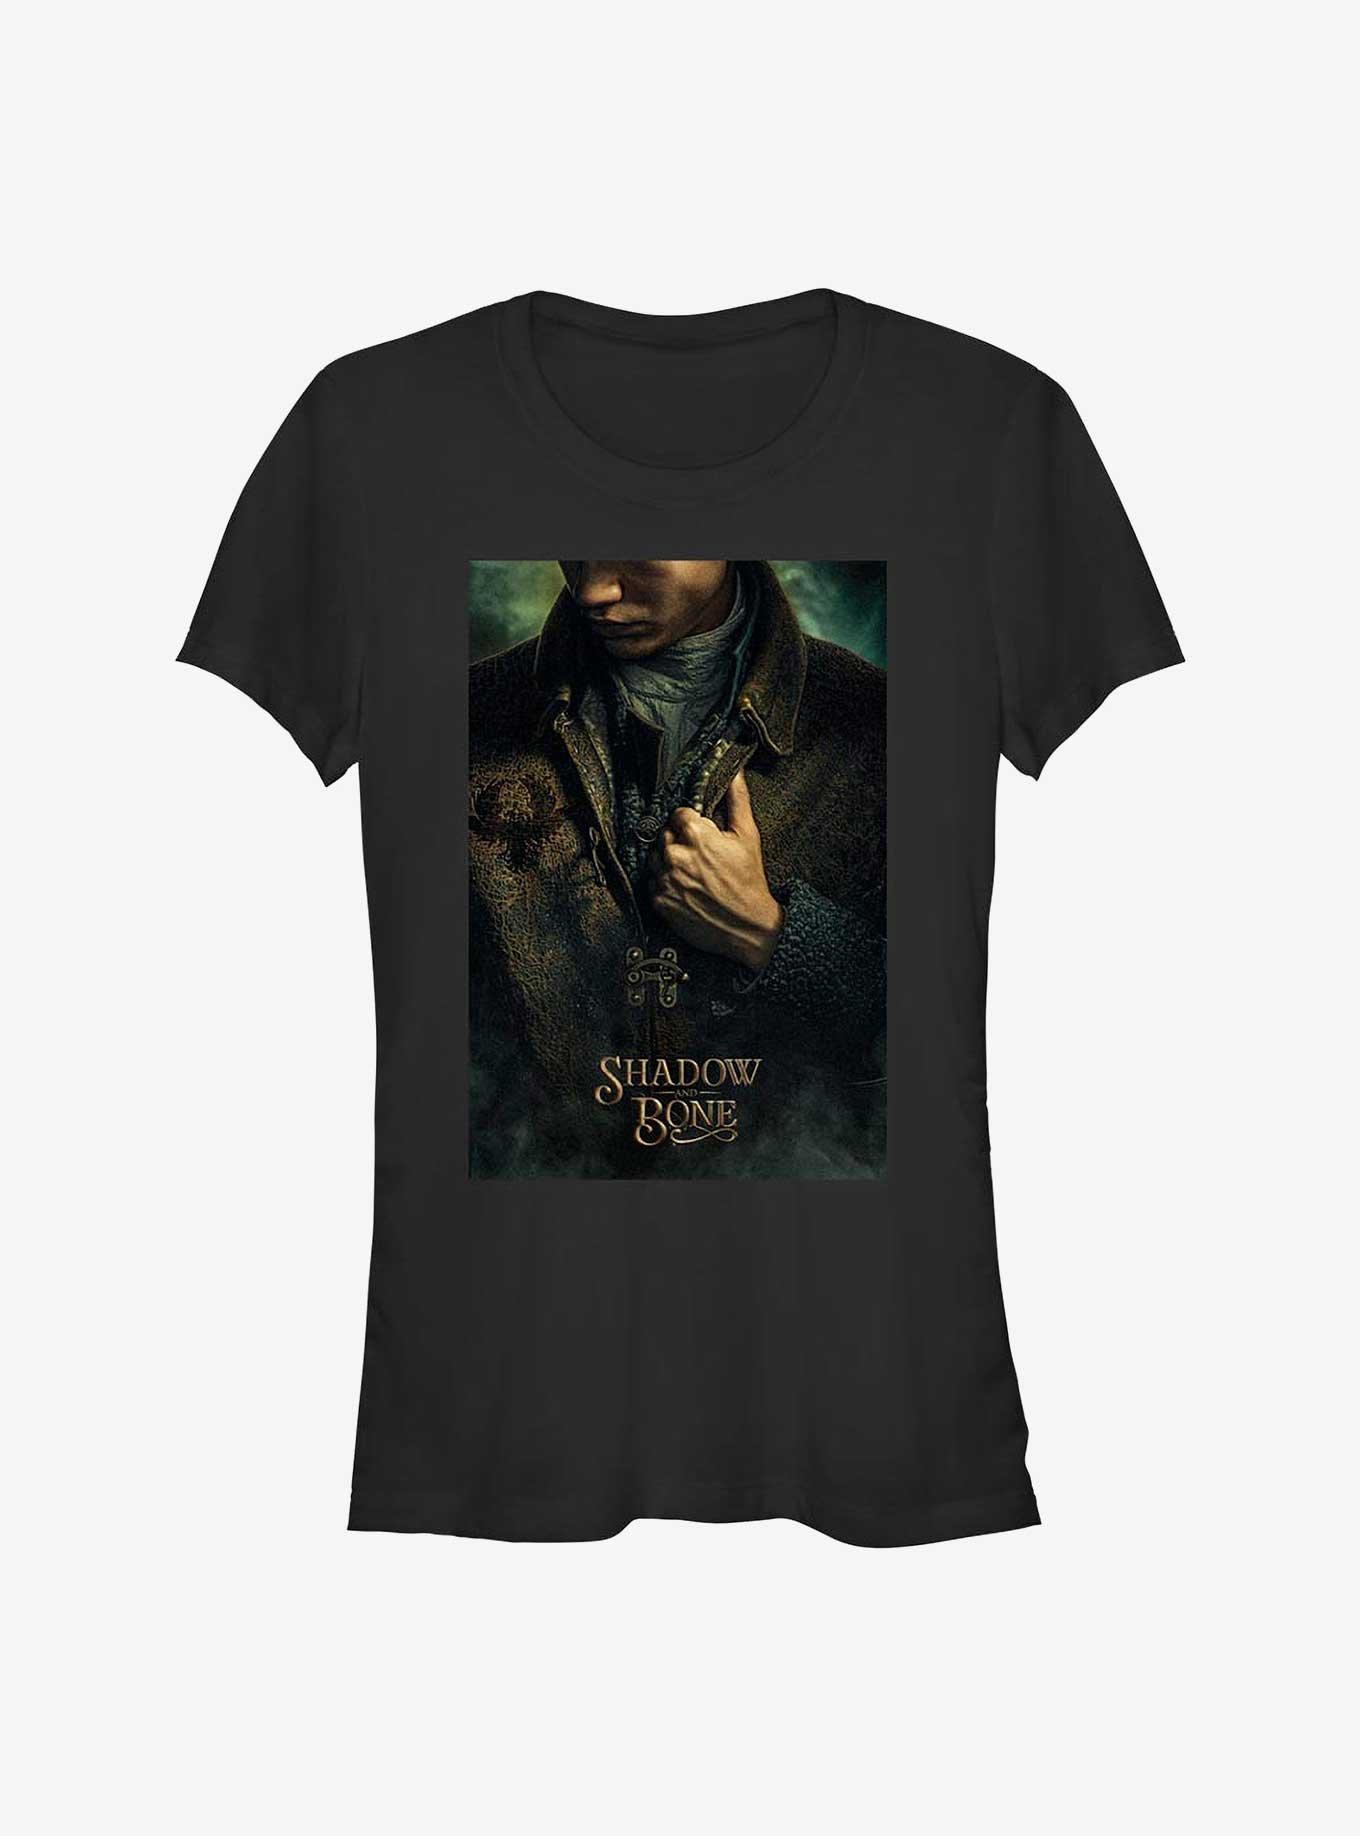 Shadow and Bone Malyen Oretsev Poster Girls T-Shirt